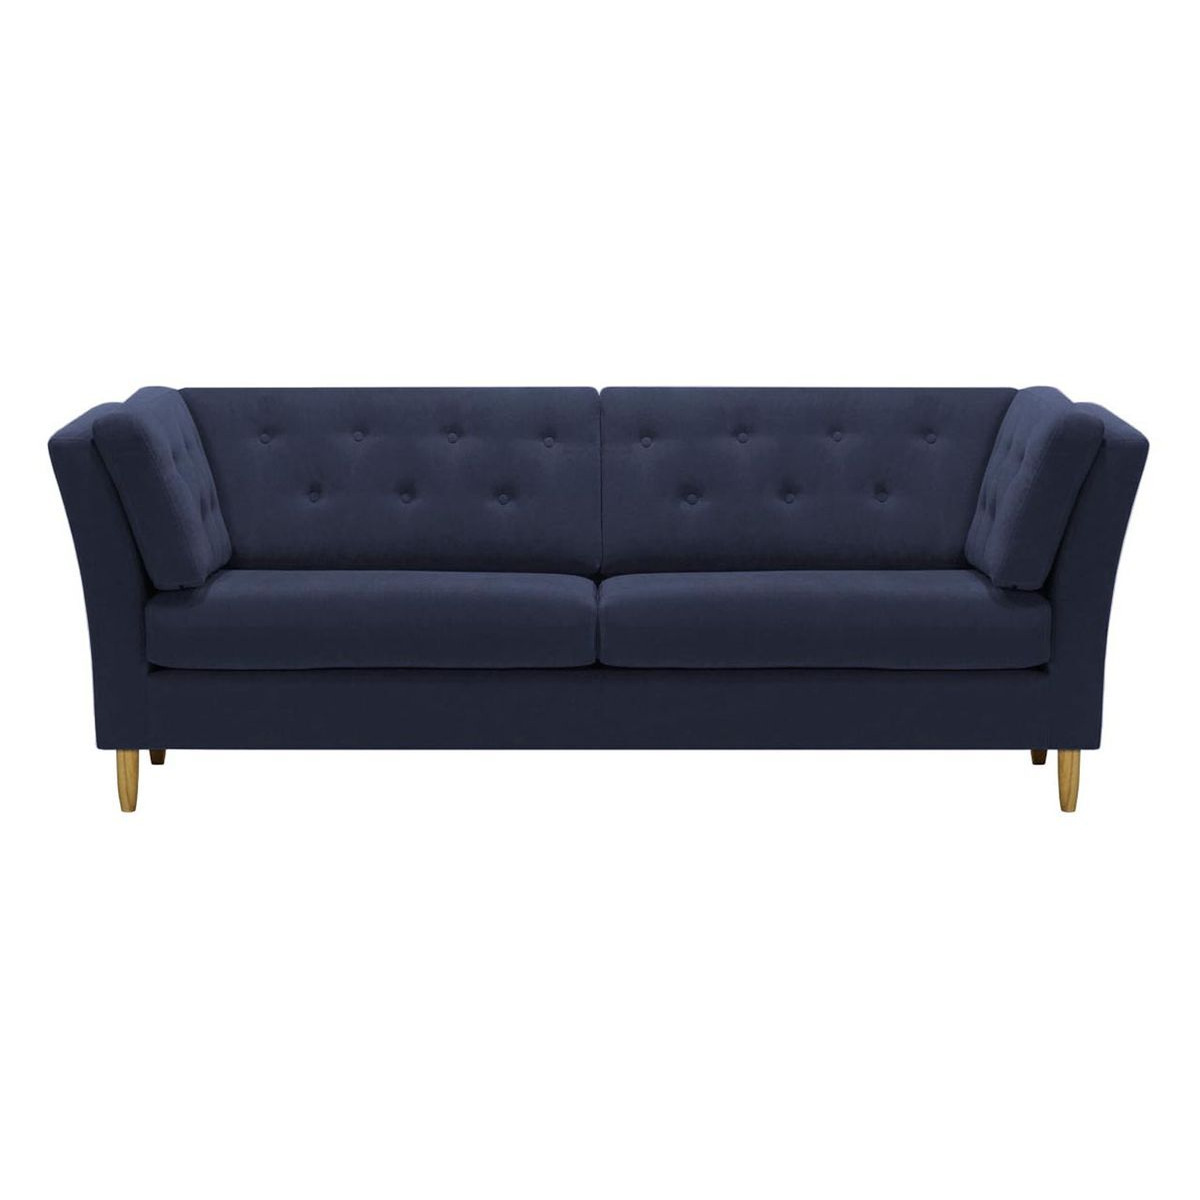 Viko 3 Seater Sofa, navy blue - image 1